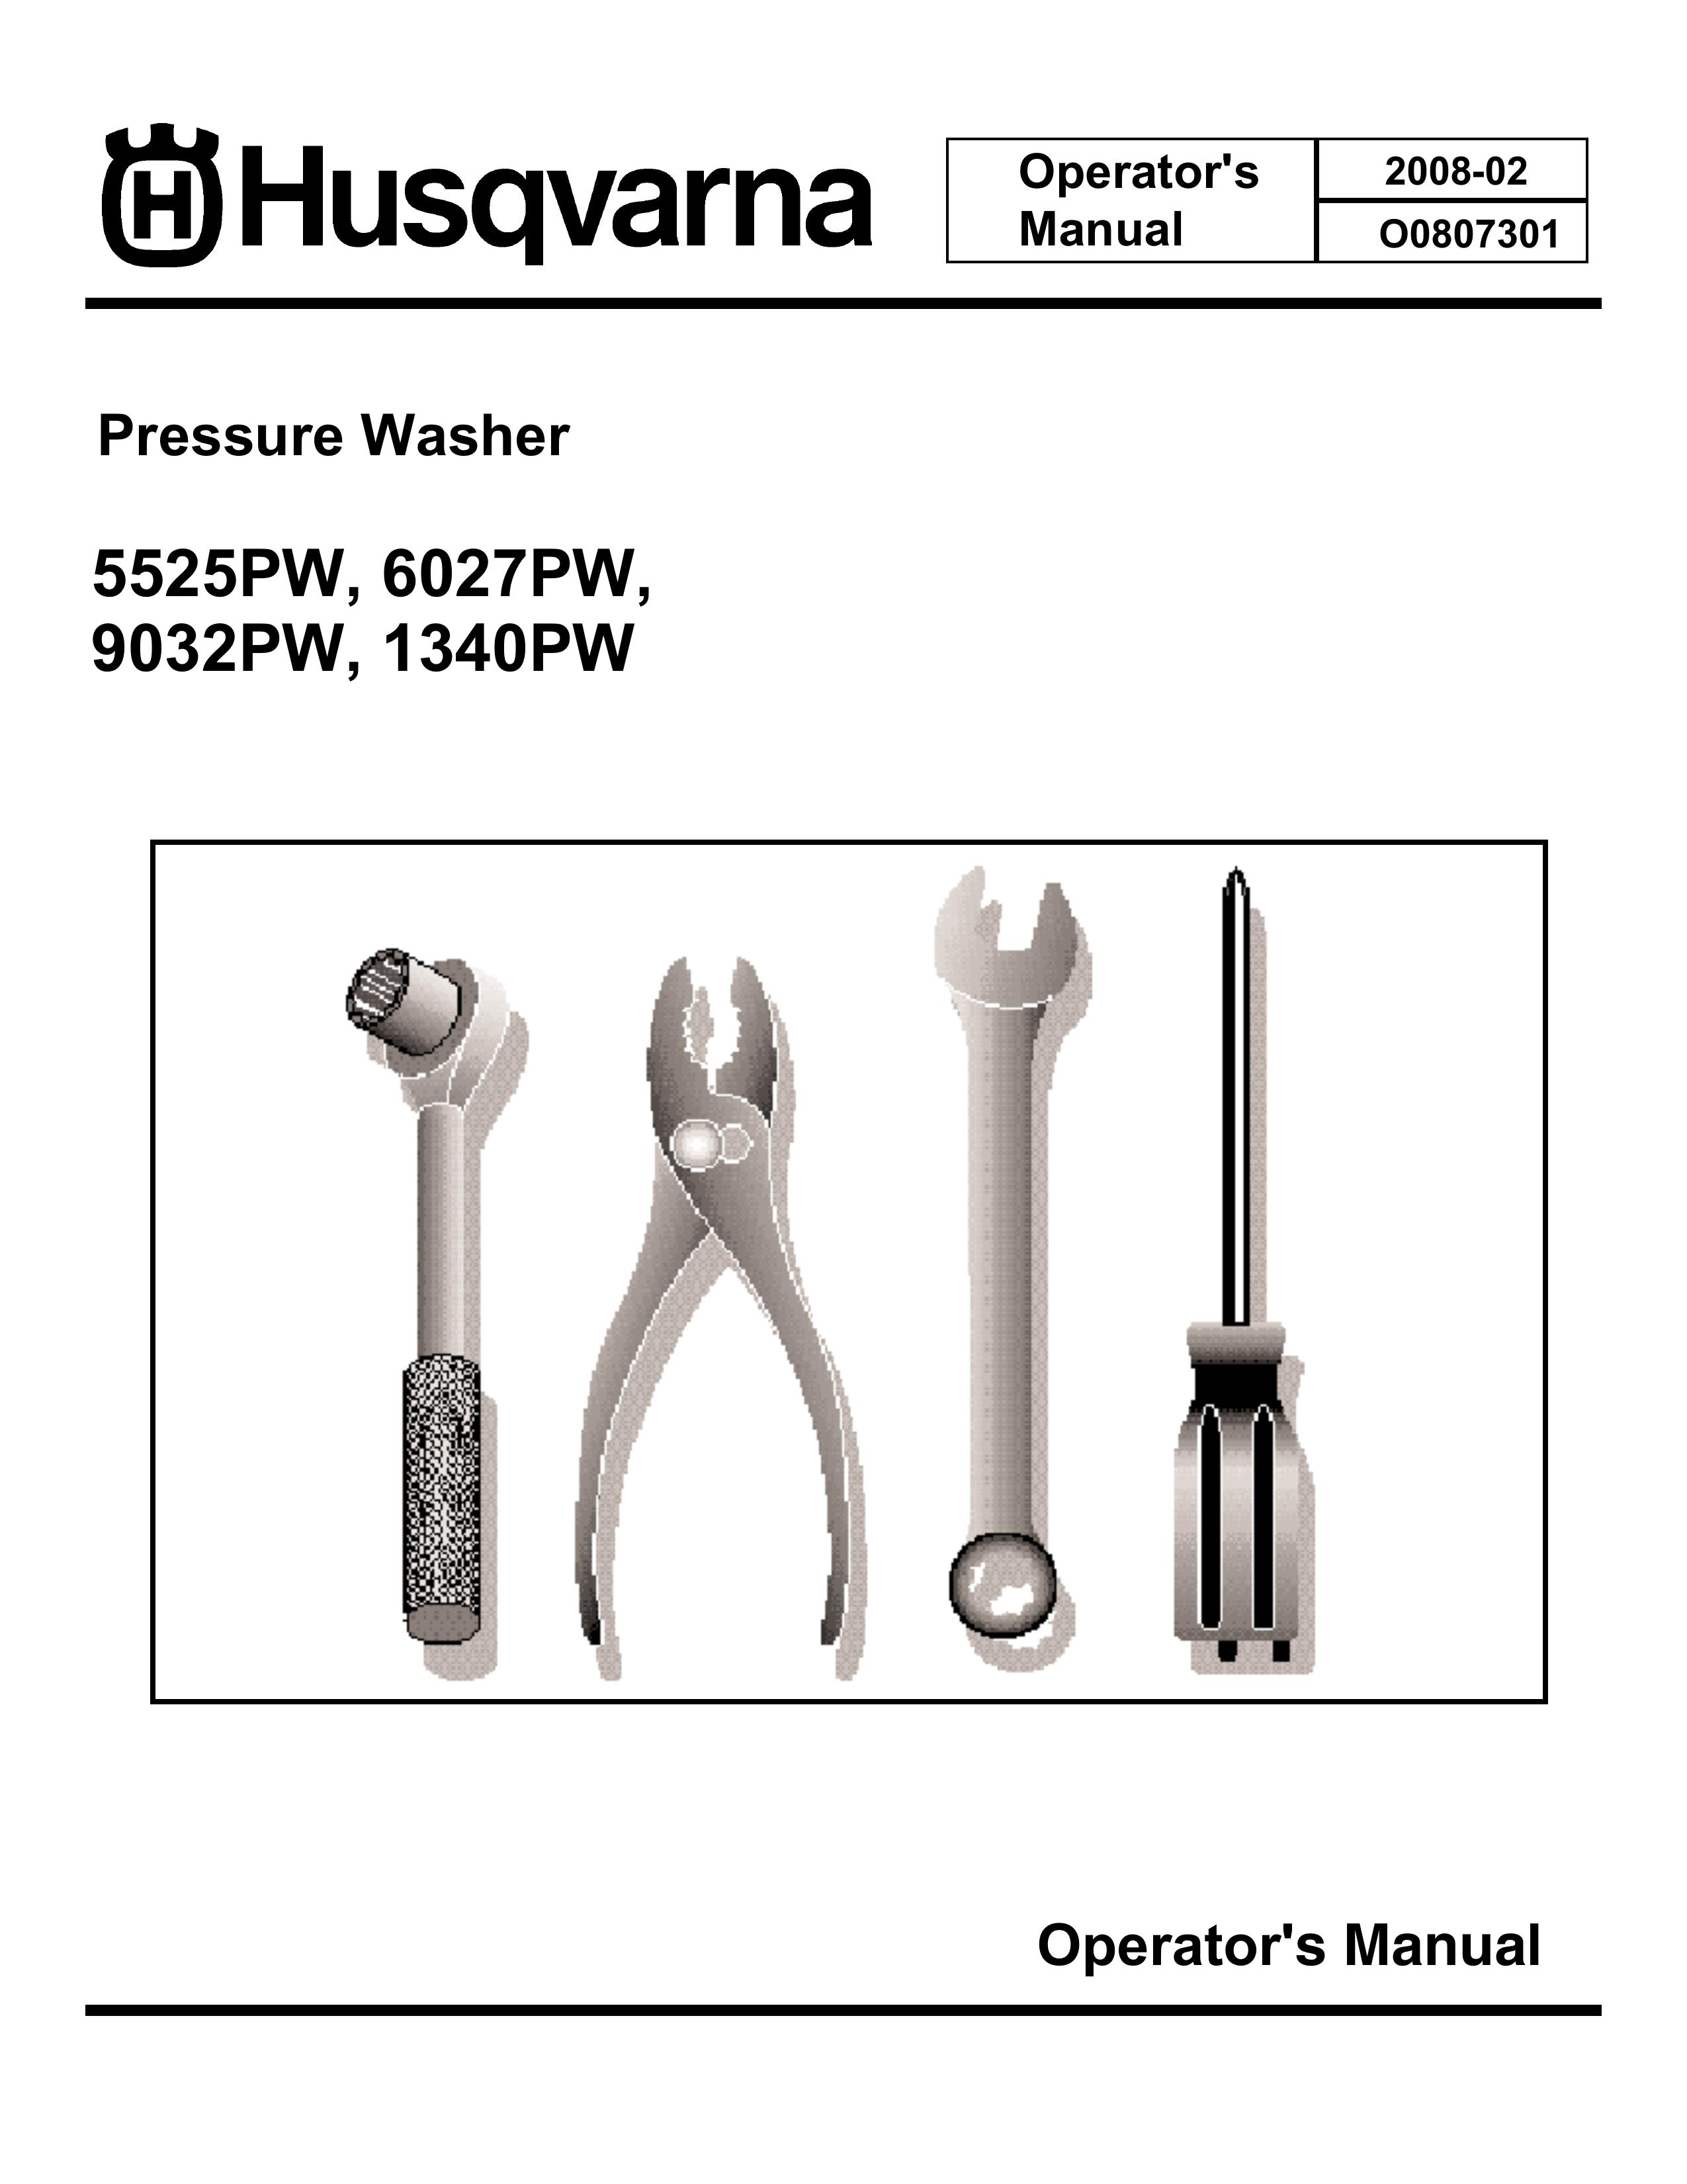 Husqvarna 6027PW Pressure Washer User Manual